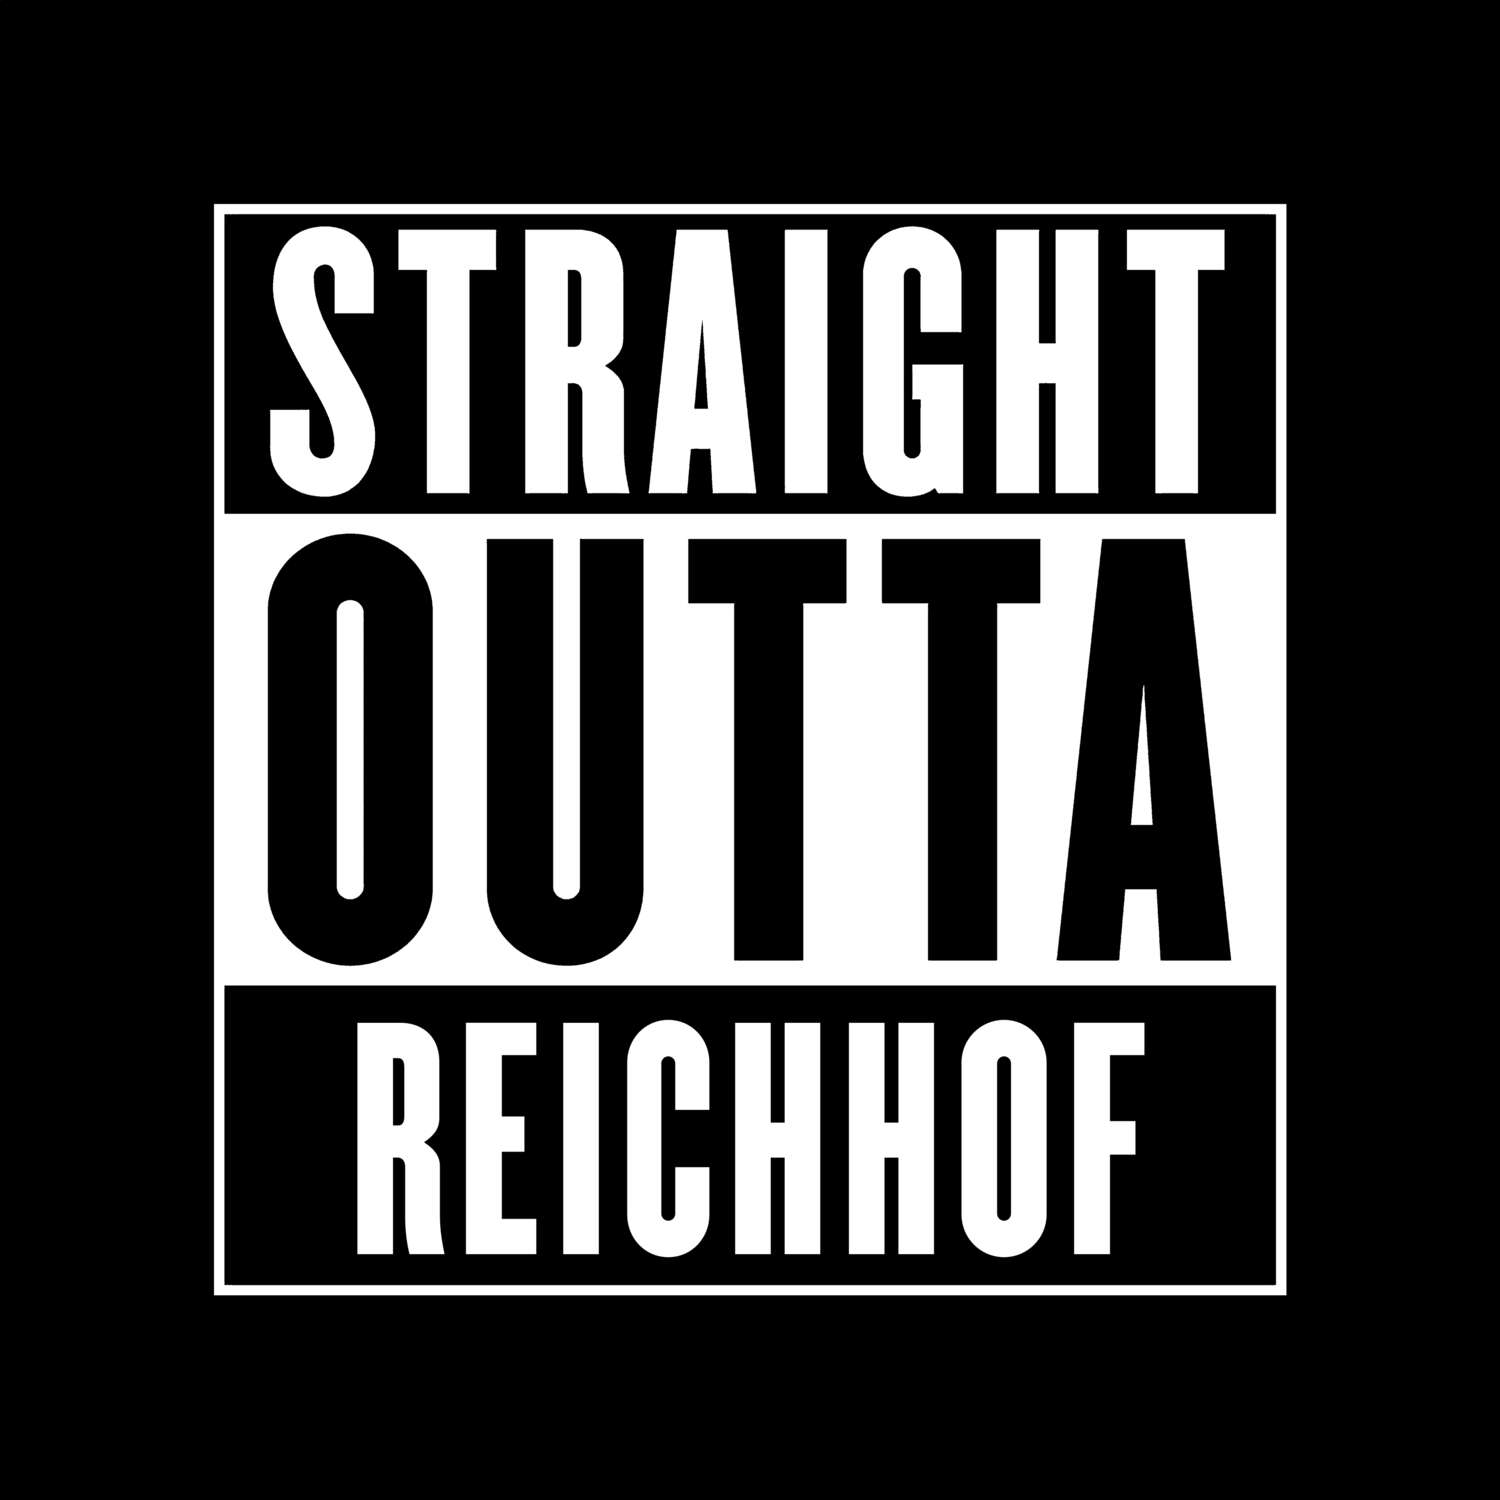 Reichhof T-Shirt »Straight Outta«